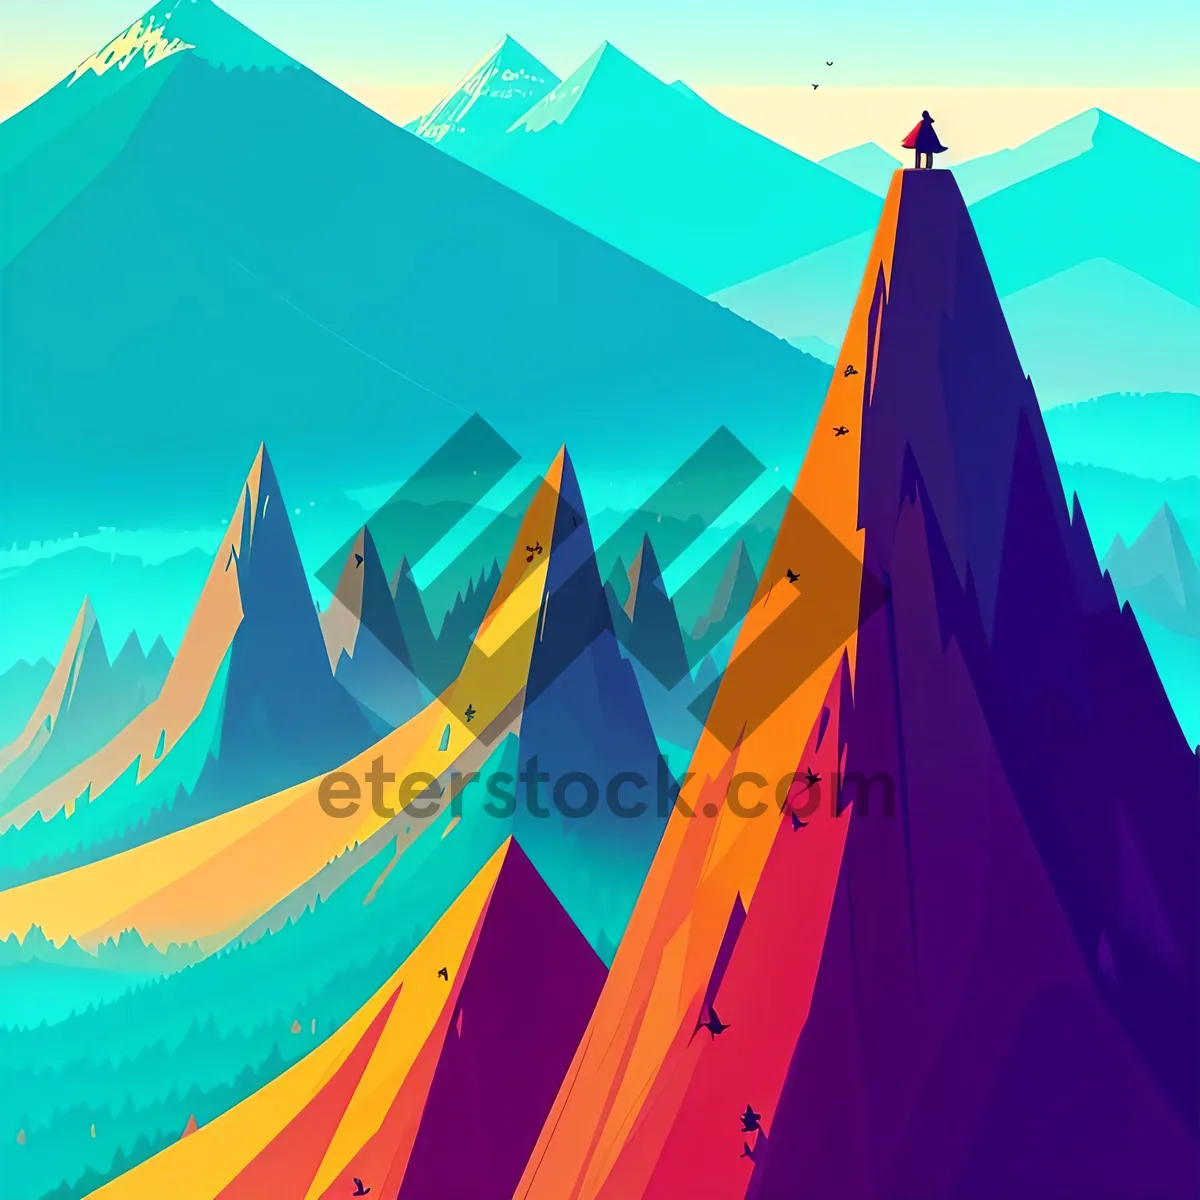 Picture of Vibrant Canvas Tent Design: Colorful Artistic Graphic